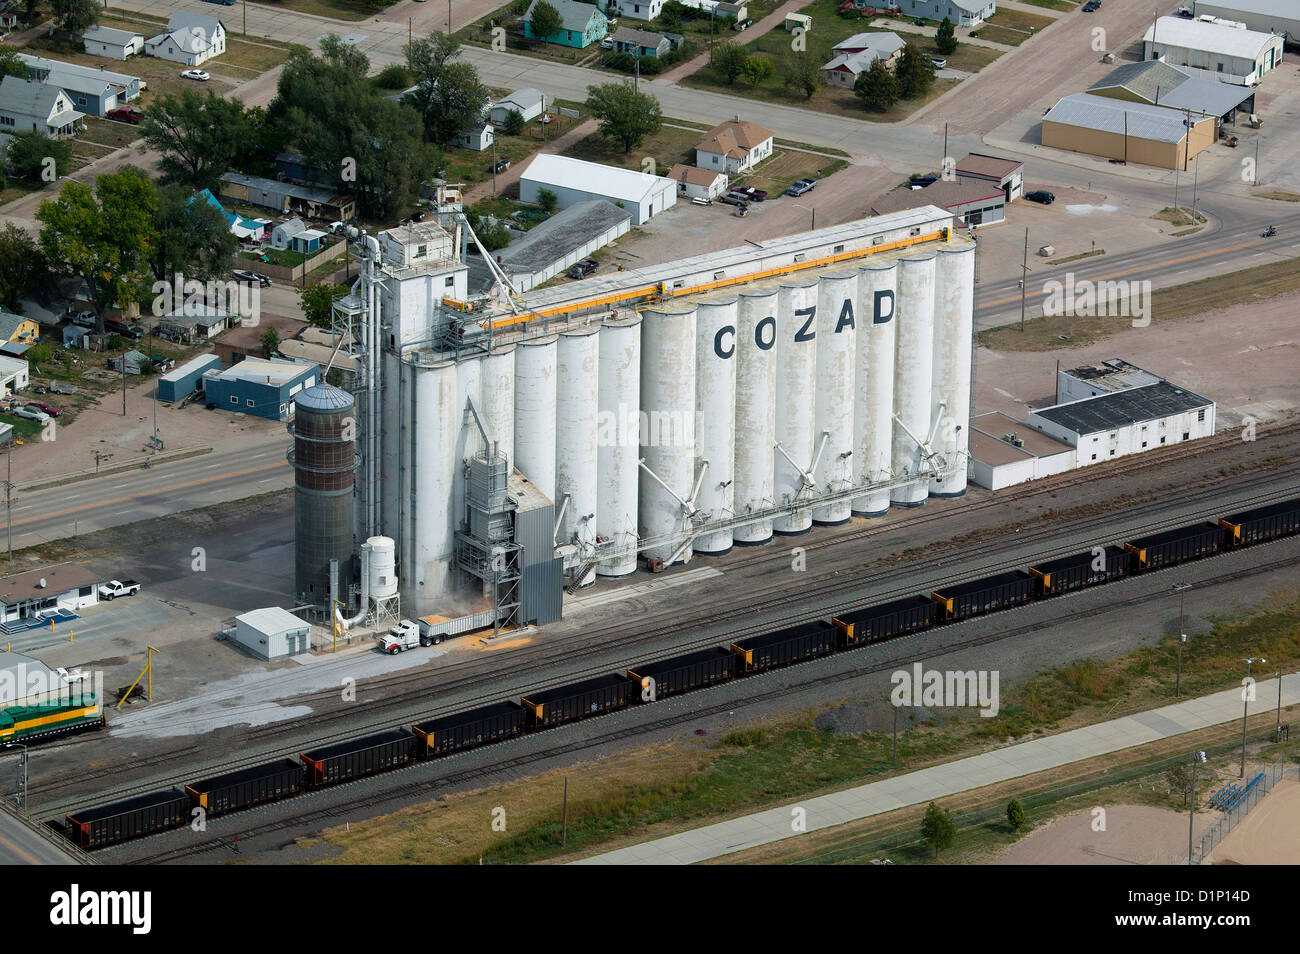 Luftbild-LKW verladen mit Mais bei Grain Elevator Cozad, Nebraska Stockfoto